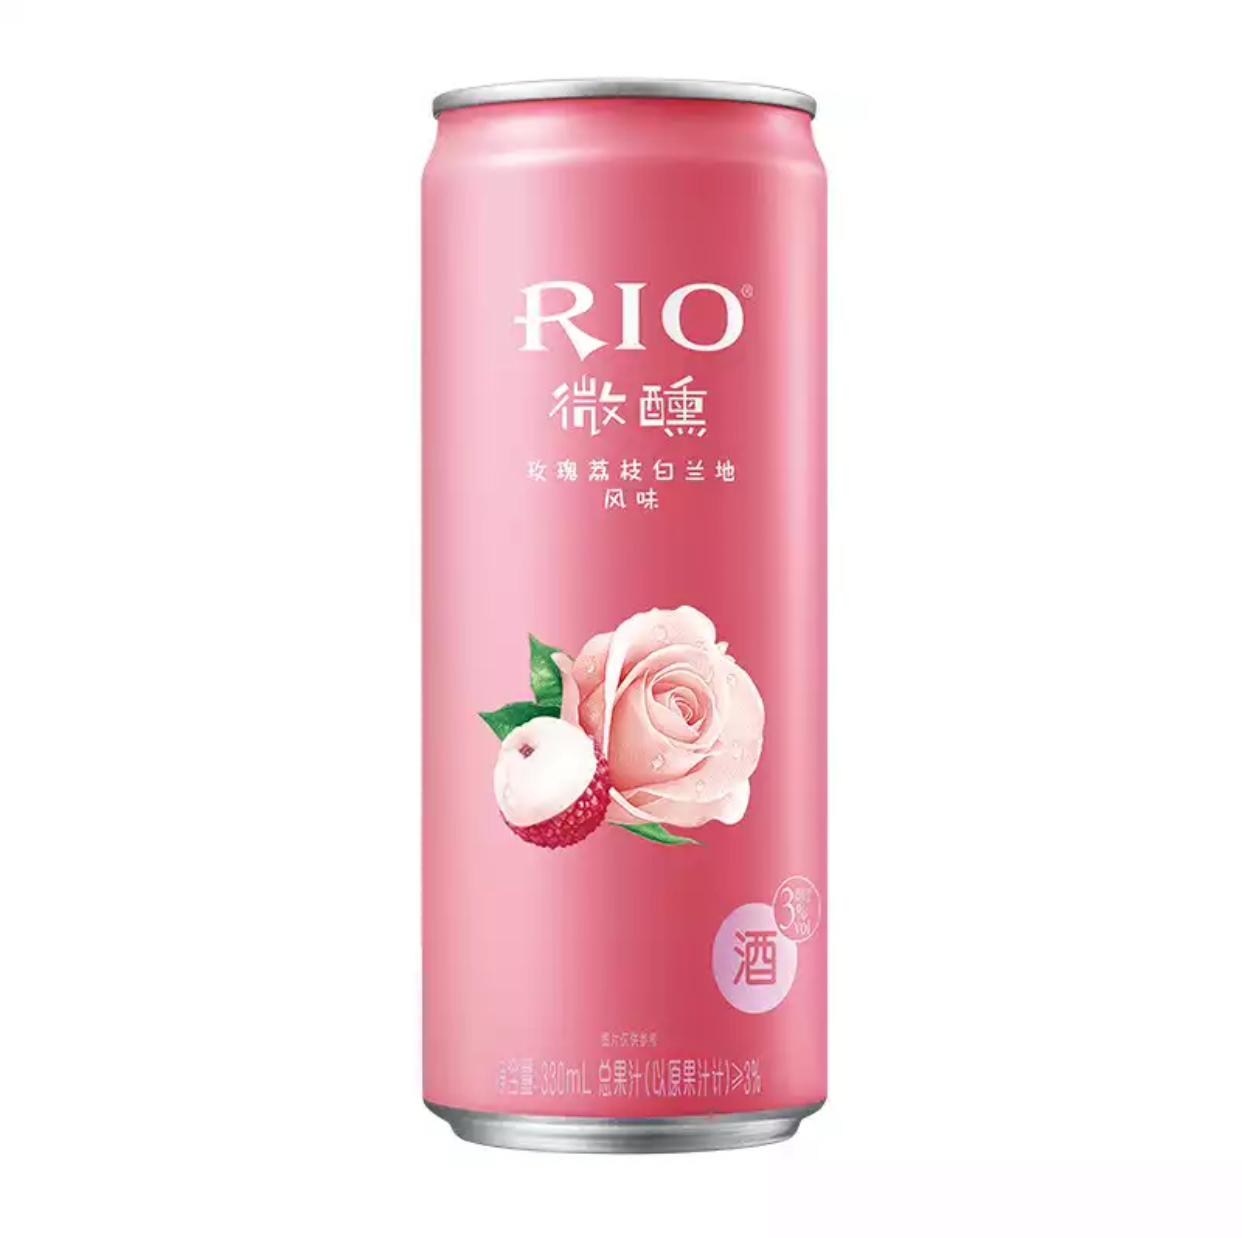 rio微醺玫瑰荔枝白兰地风味鸡尾酒330ml罐